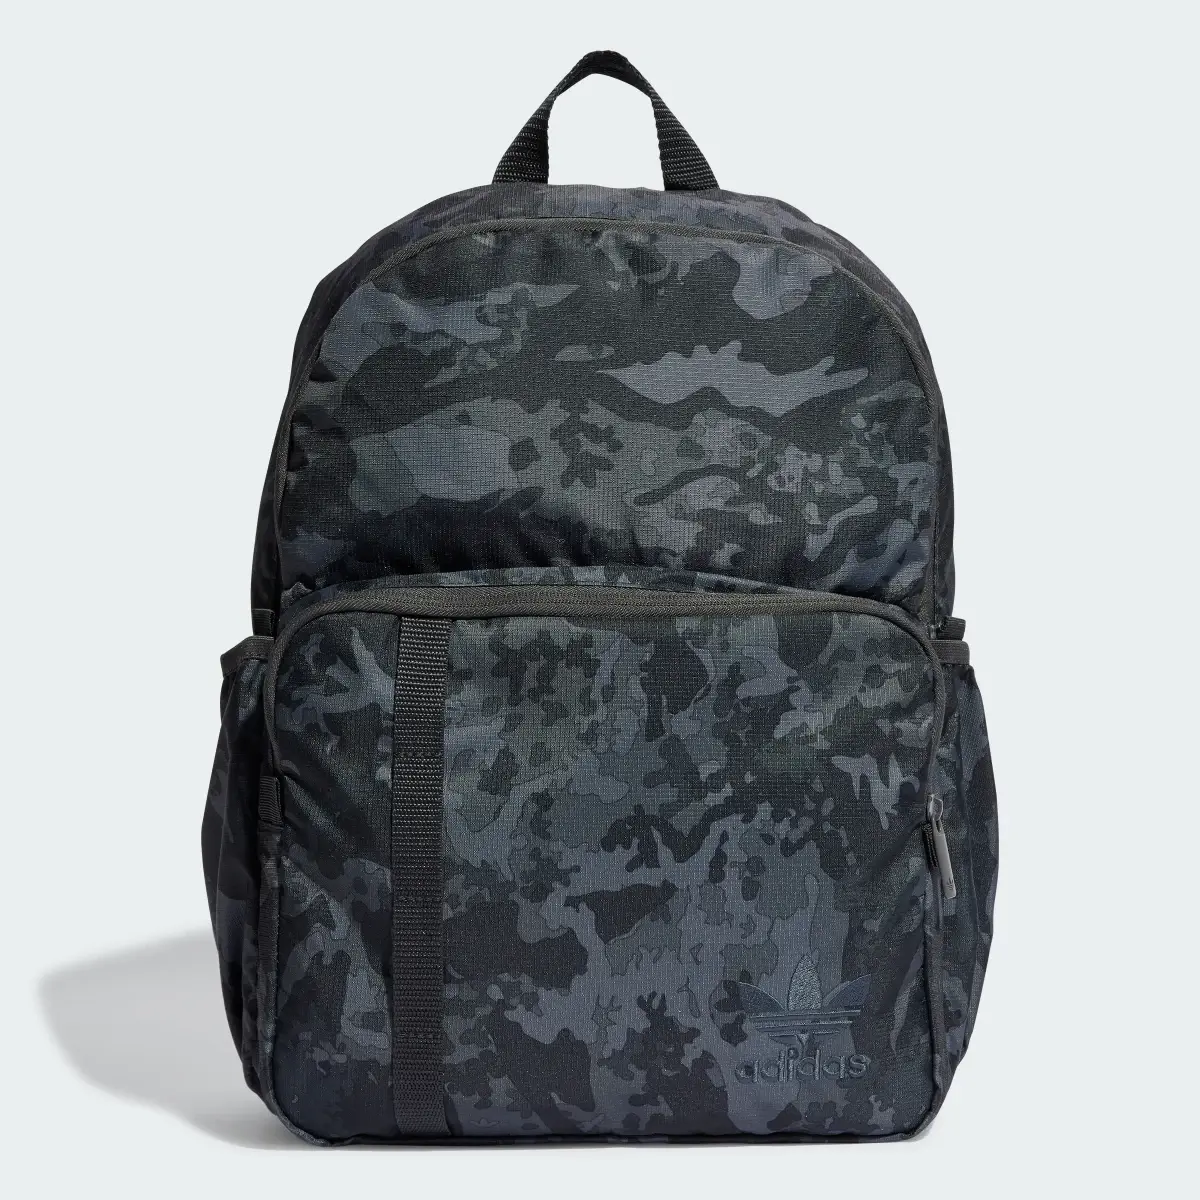 Adidas Camo Classic Backpack. 2